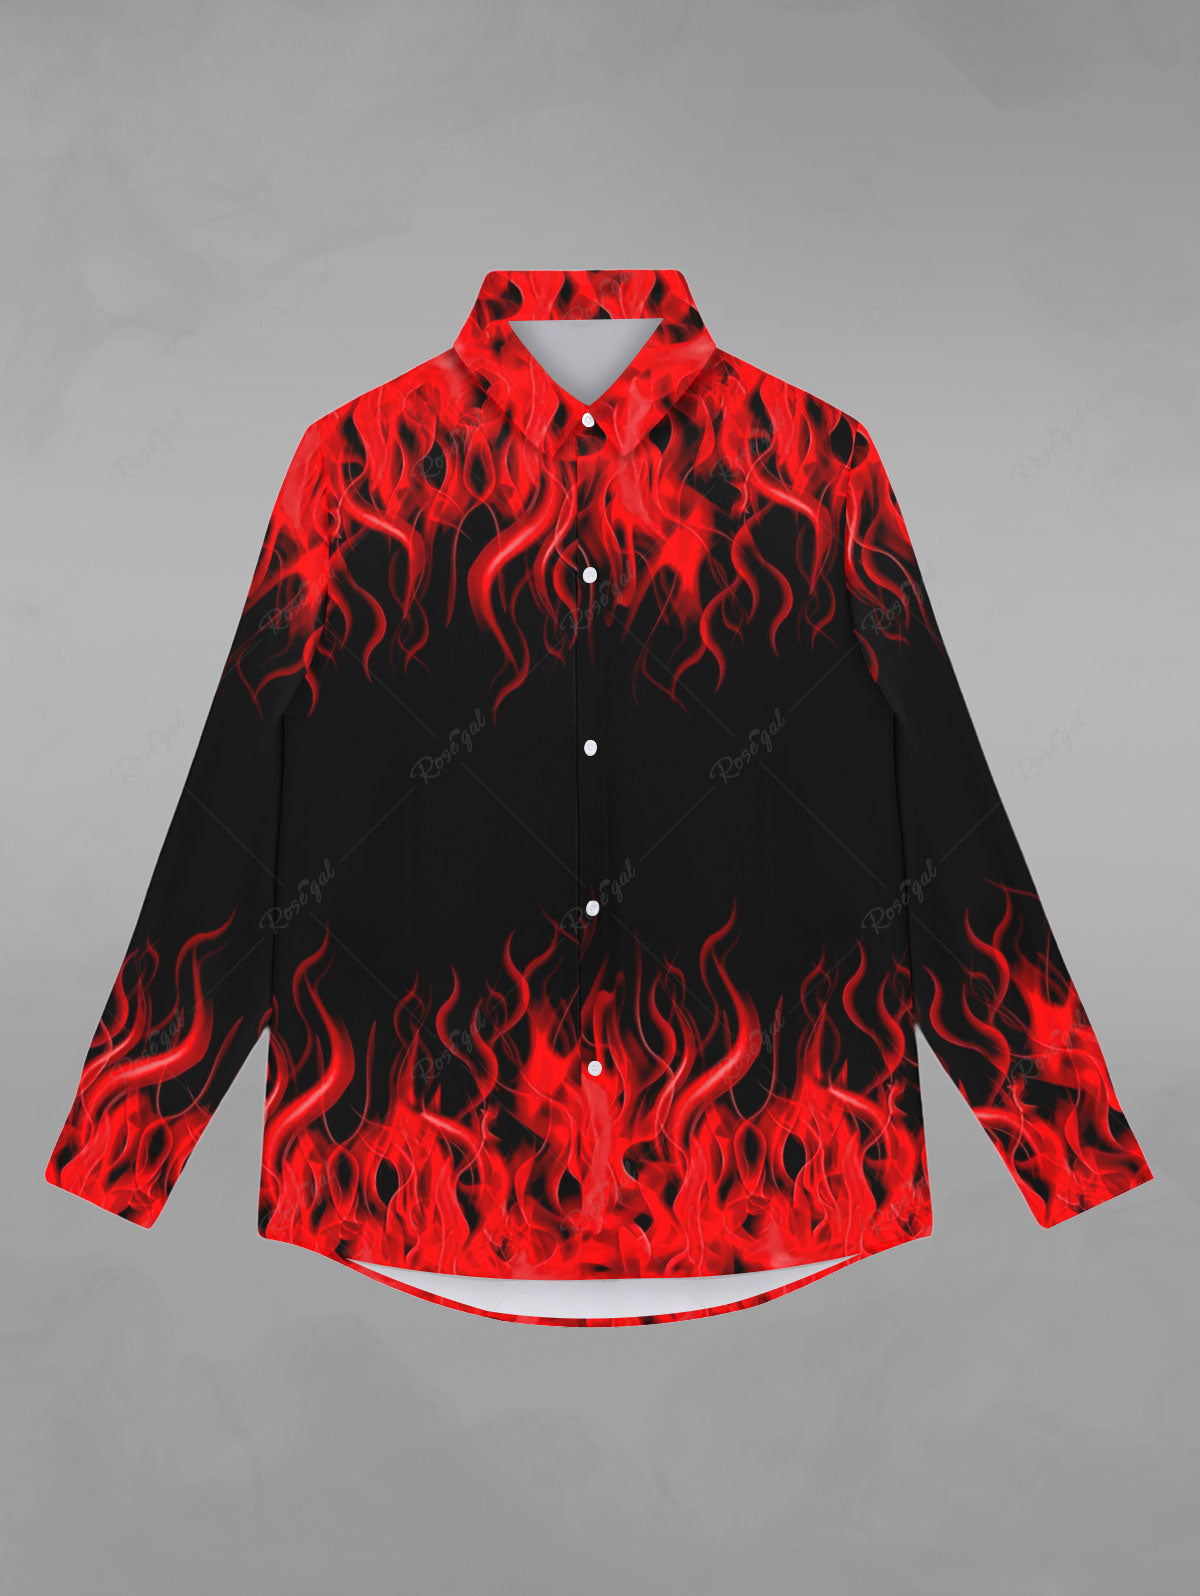 Gothic Fire Flame Print Buttons Lapel Collar Shirt For Men